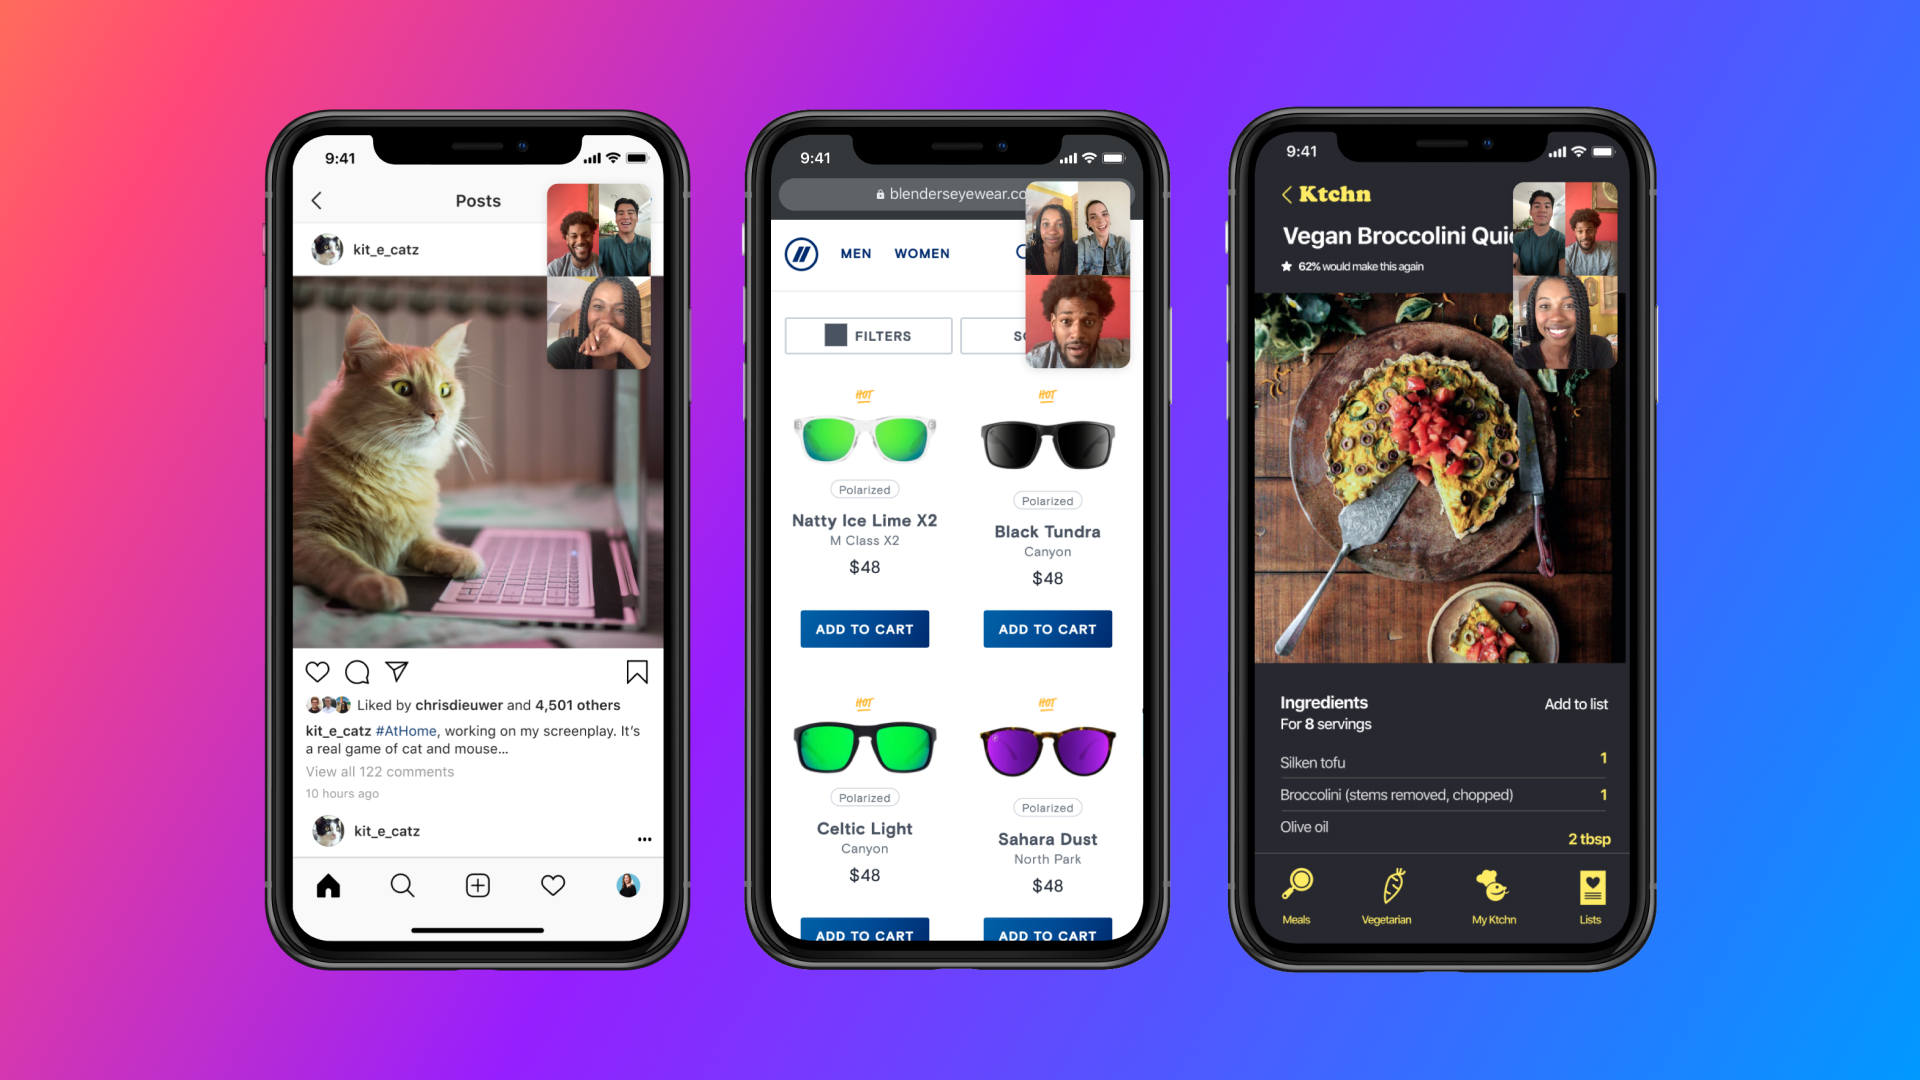 X Com Hot Facebook Videos - Facebook Messenger iOS App Gains Screen Sharing Feature for Video Calls |  MacRumors Forums